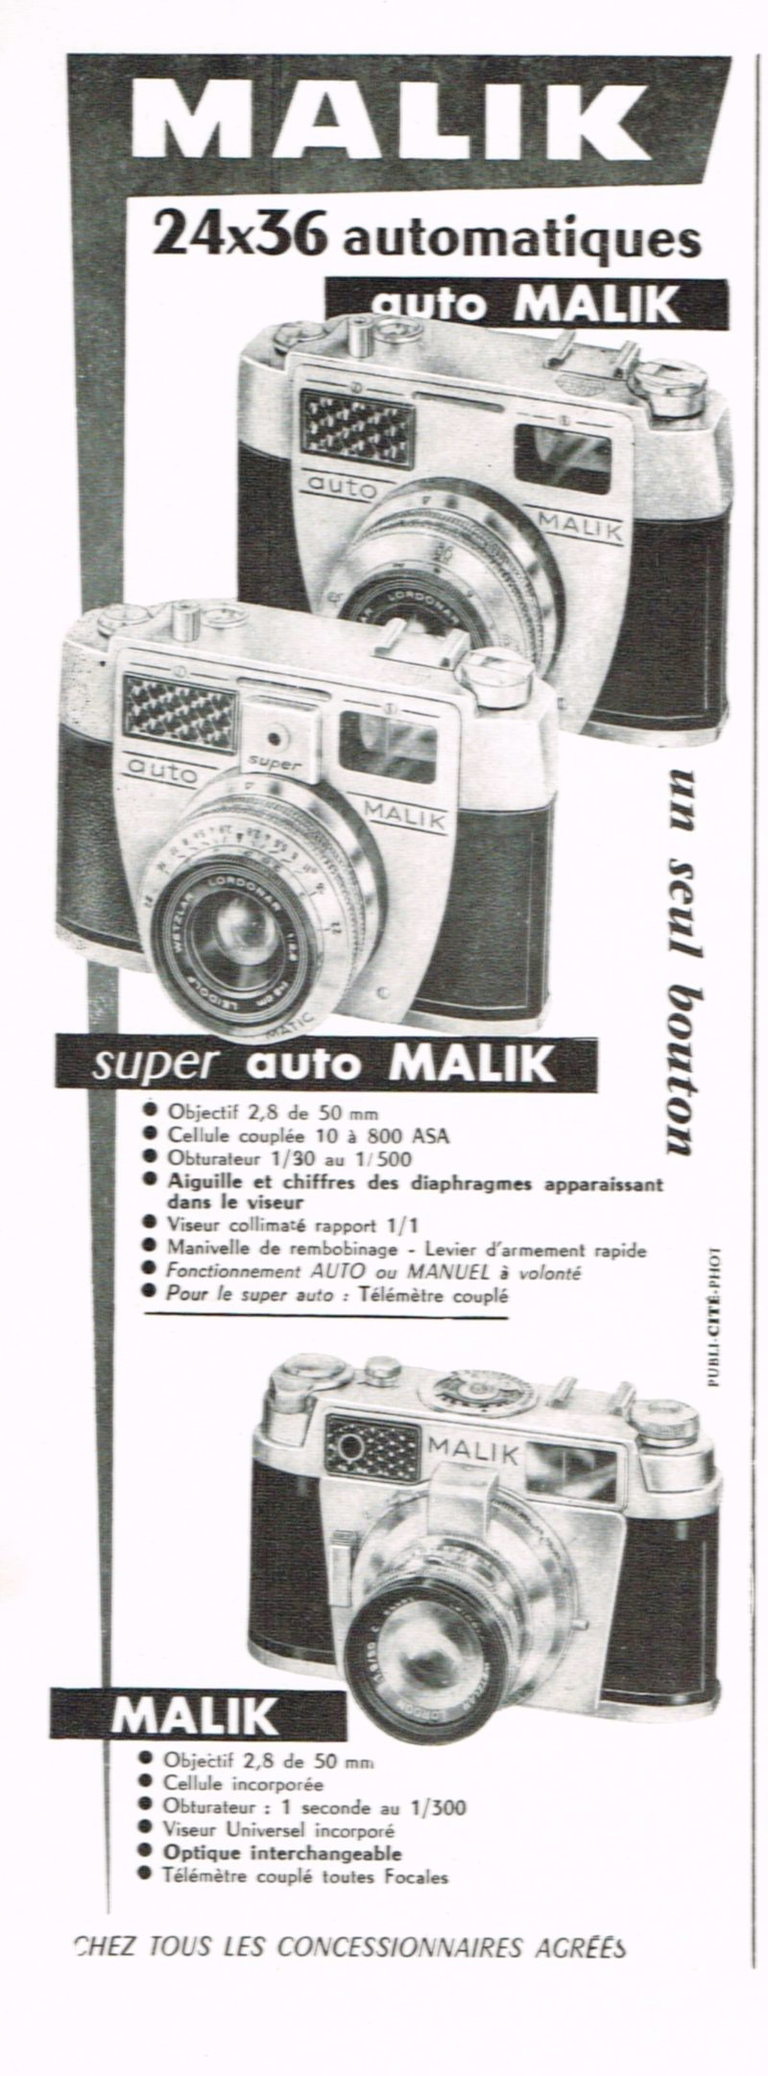 Couffin - Auto-Malik, Super Auto-Malik, Malik - juin 1961 - Photo-Cinéma